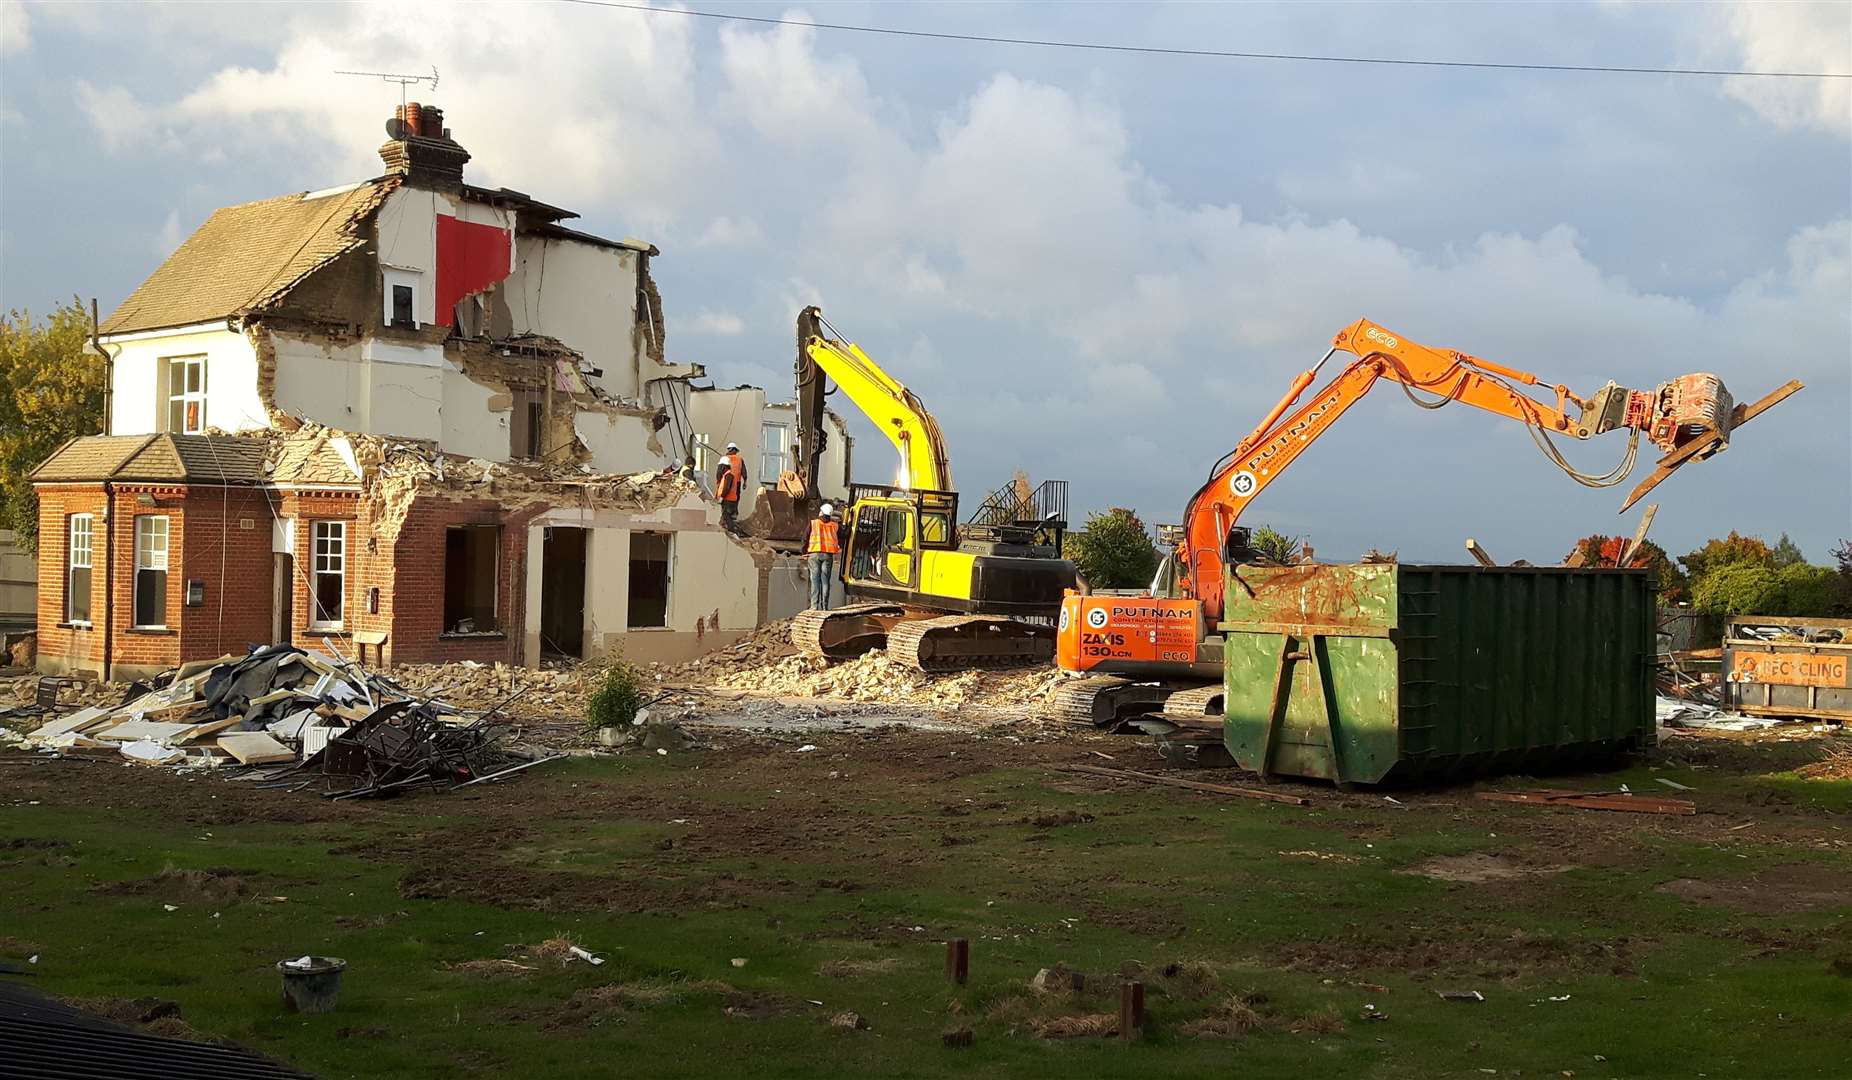 The pub was illegally demolished